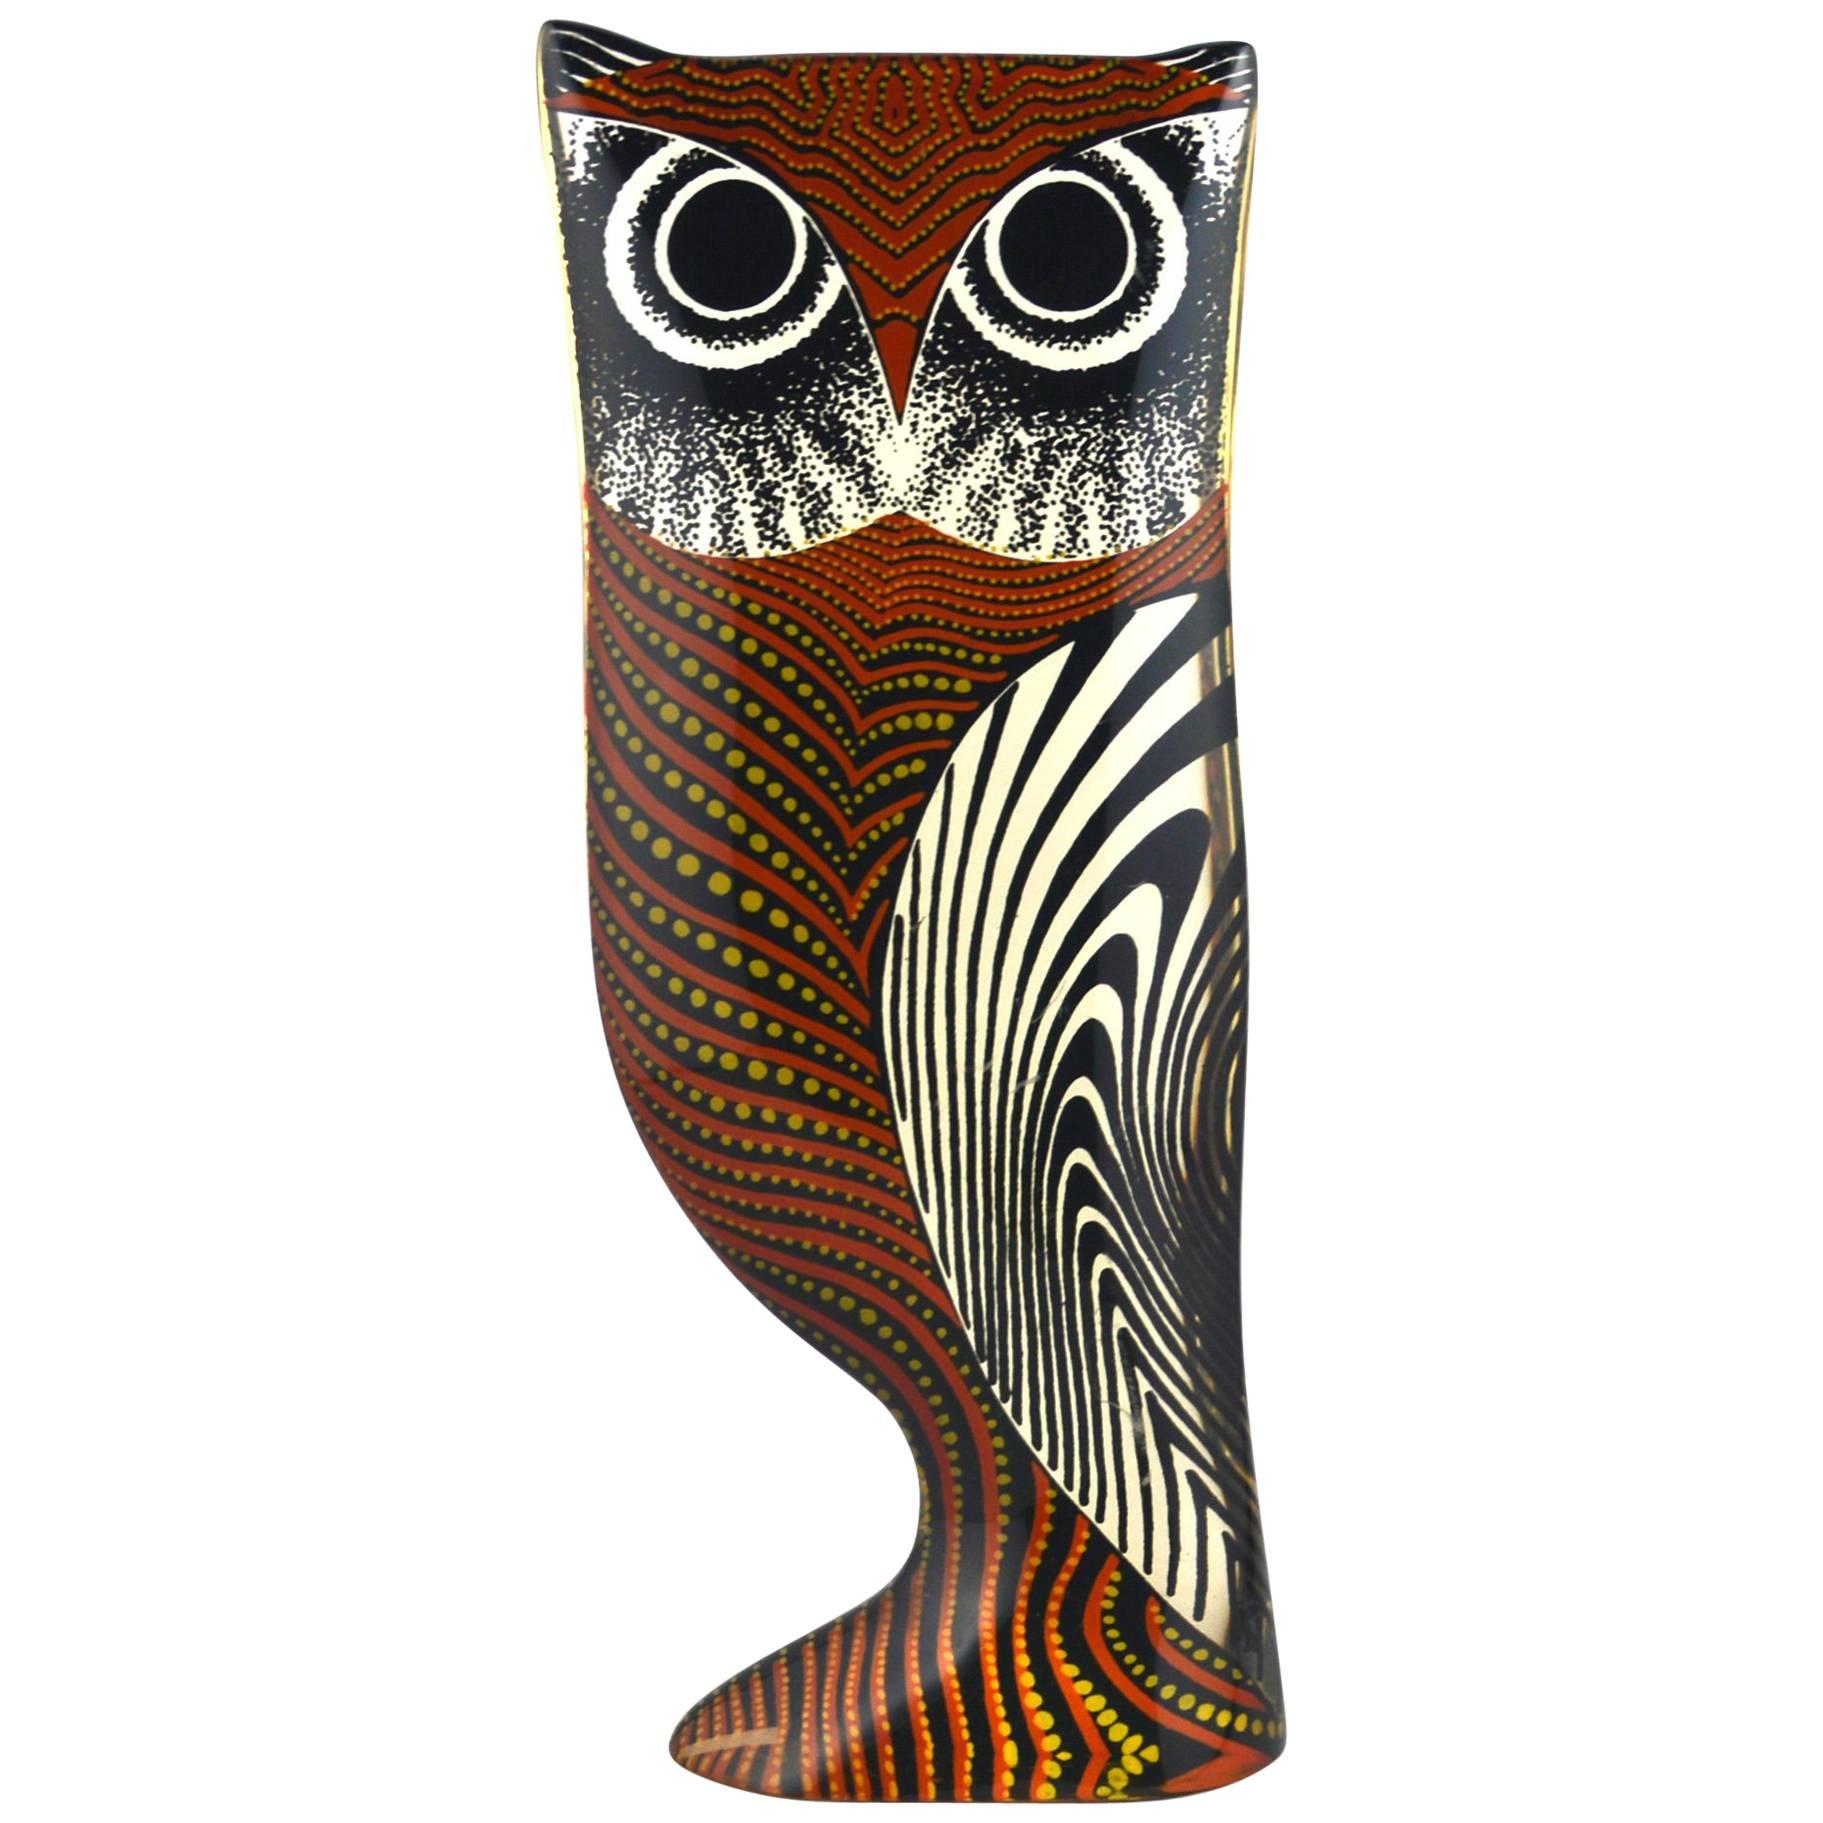 Abraham Palatnik Lucite Pop Art Colored Owl